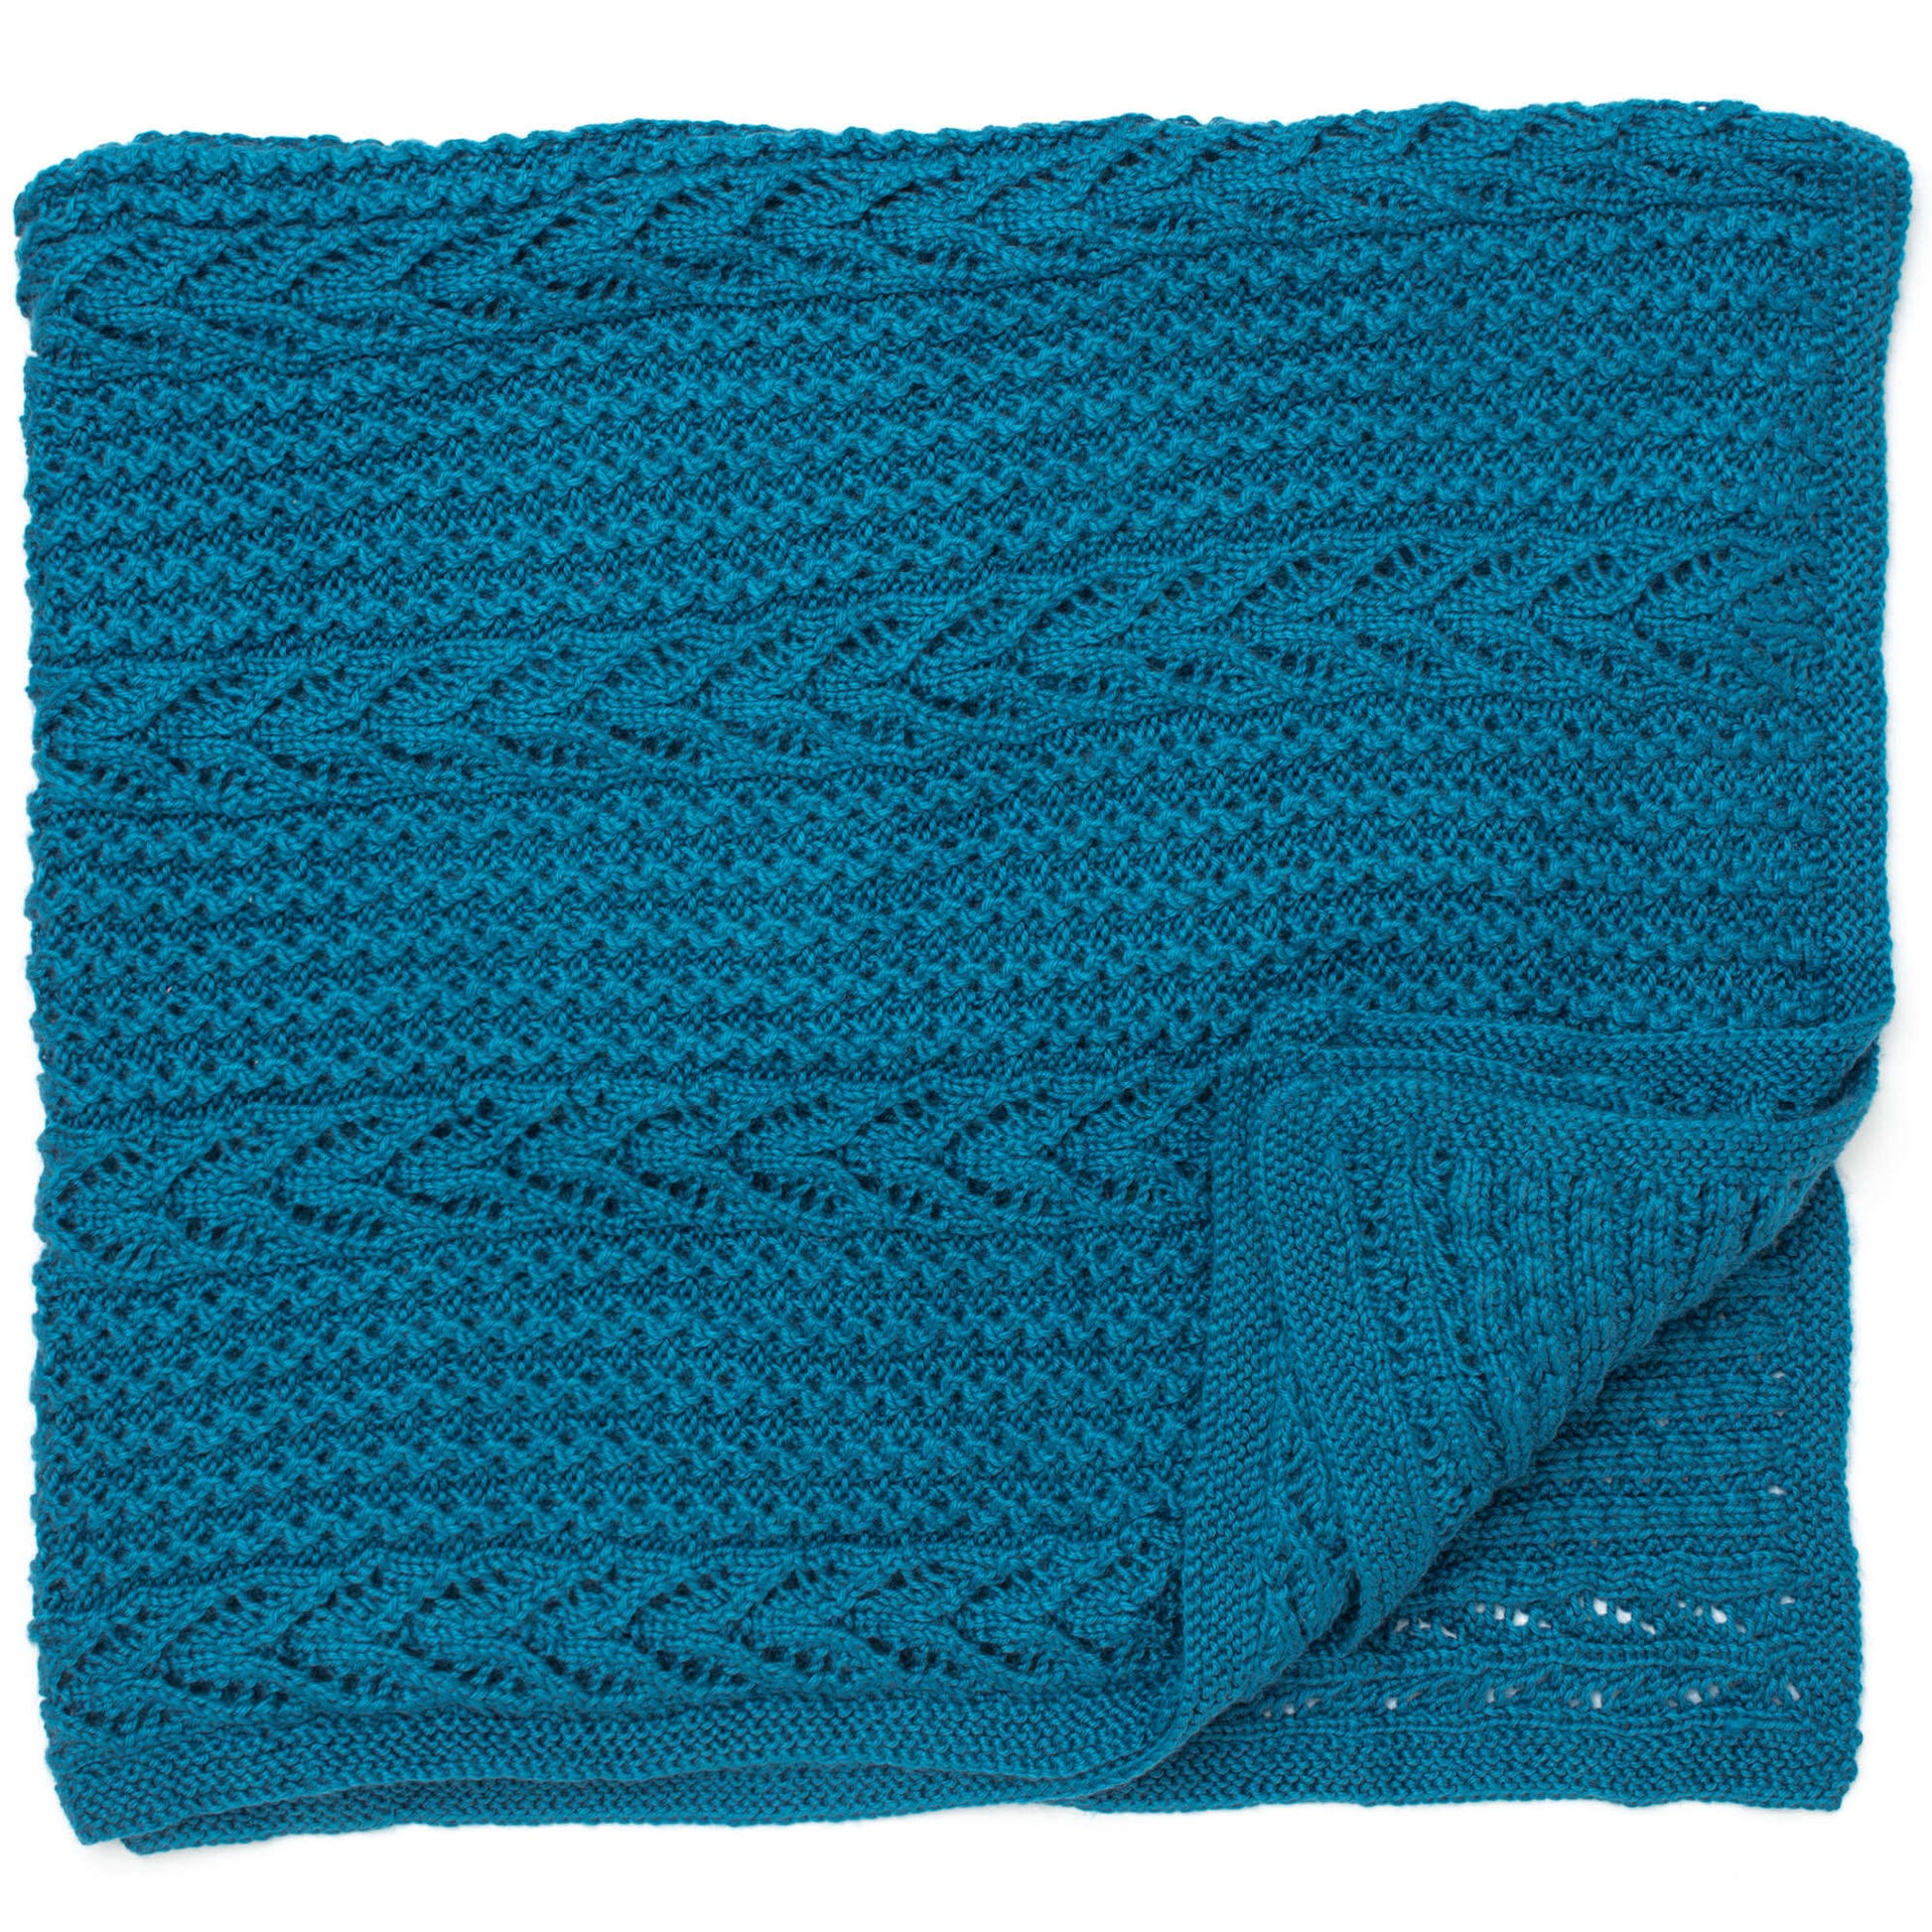 Free Bernat Knit Lacy Throw Pattern